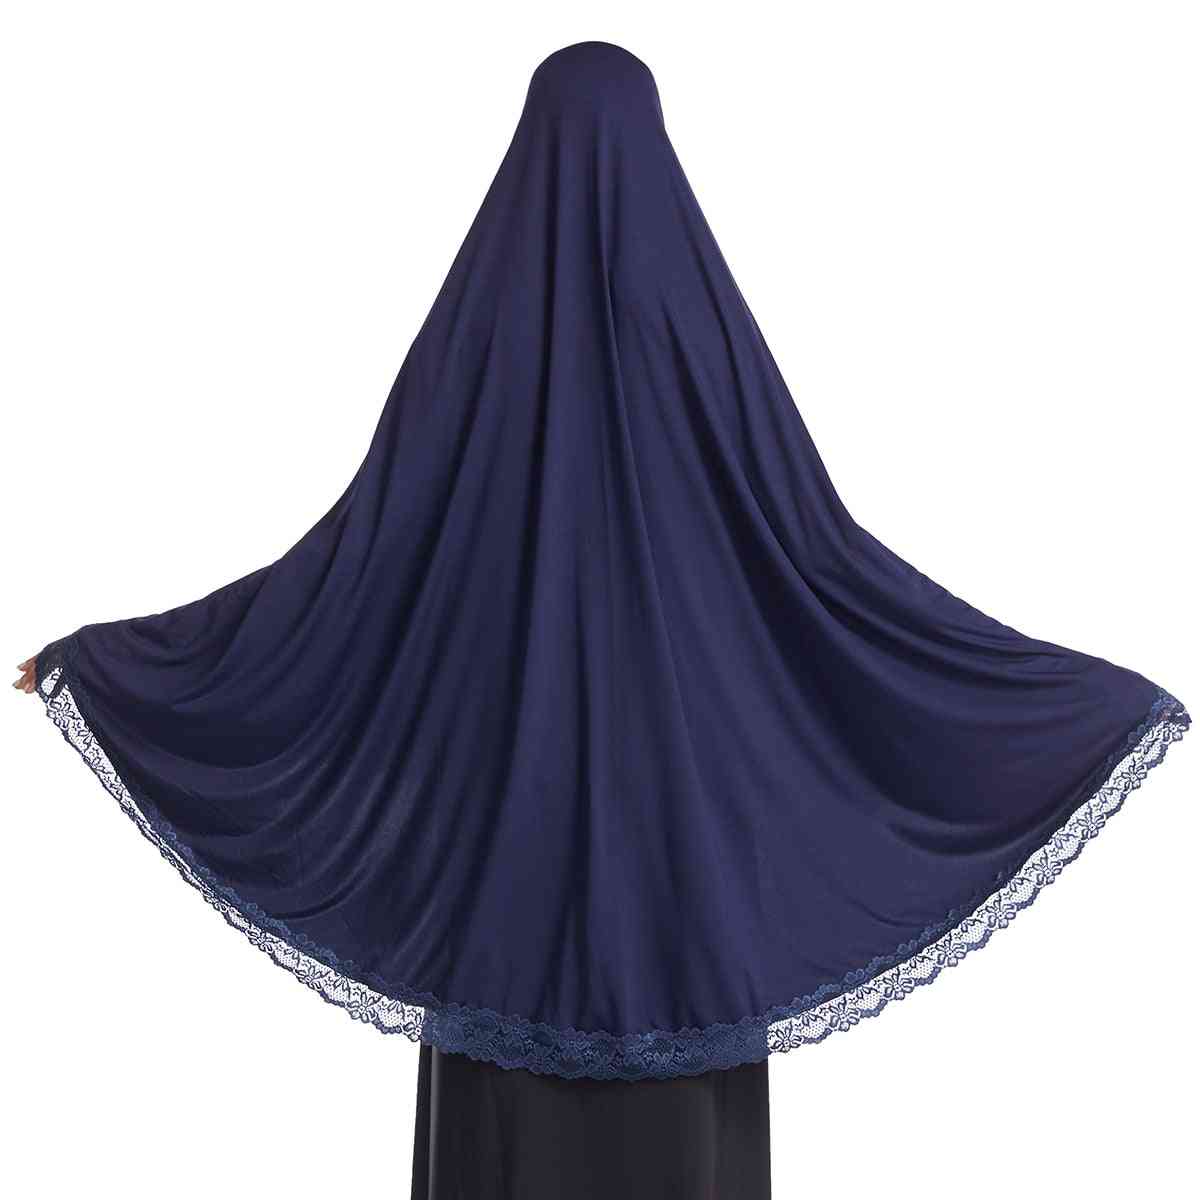 Women Muslim Prayer Long Khimar Lace Trim Islamic Veils Headcover Dubai Saudis Turkey Arabic Clothing Hijab